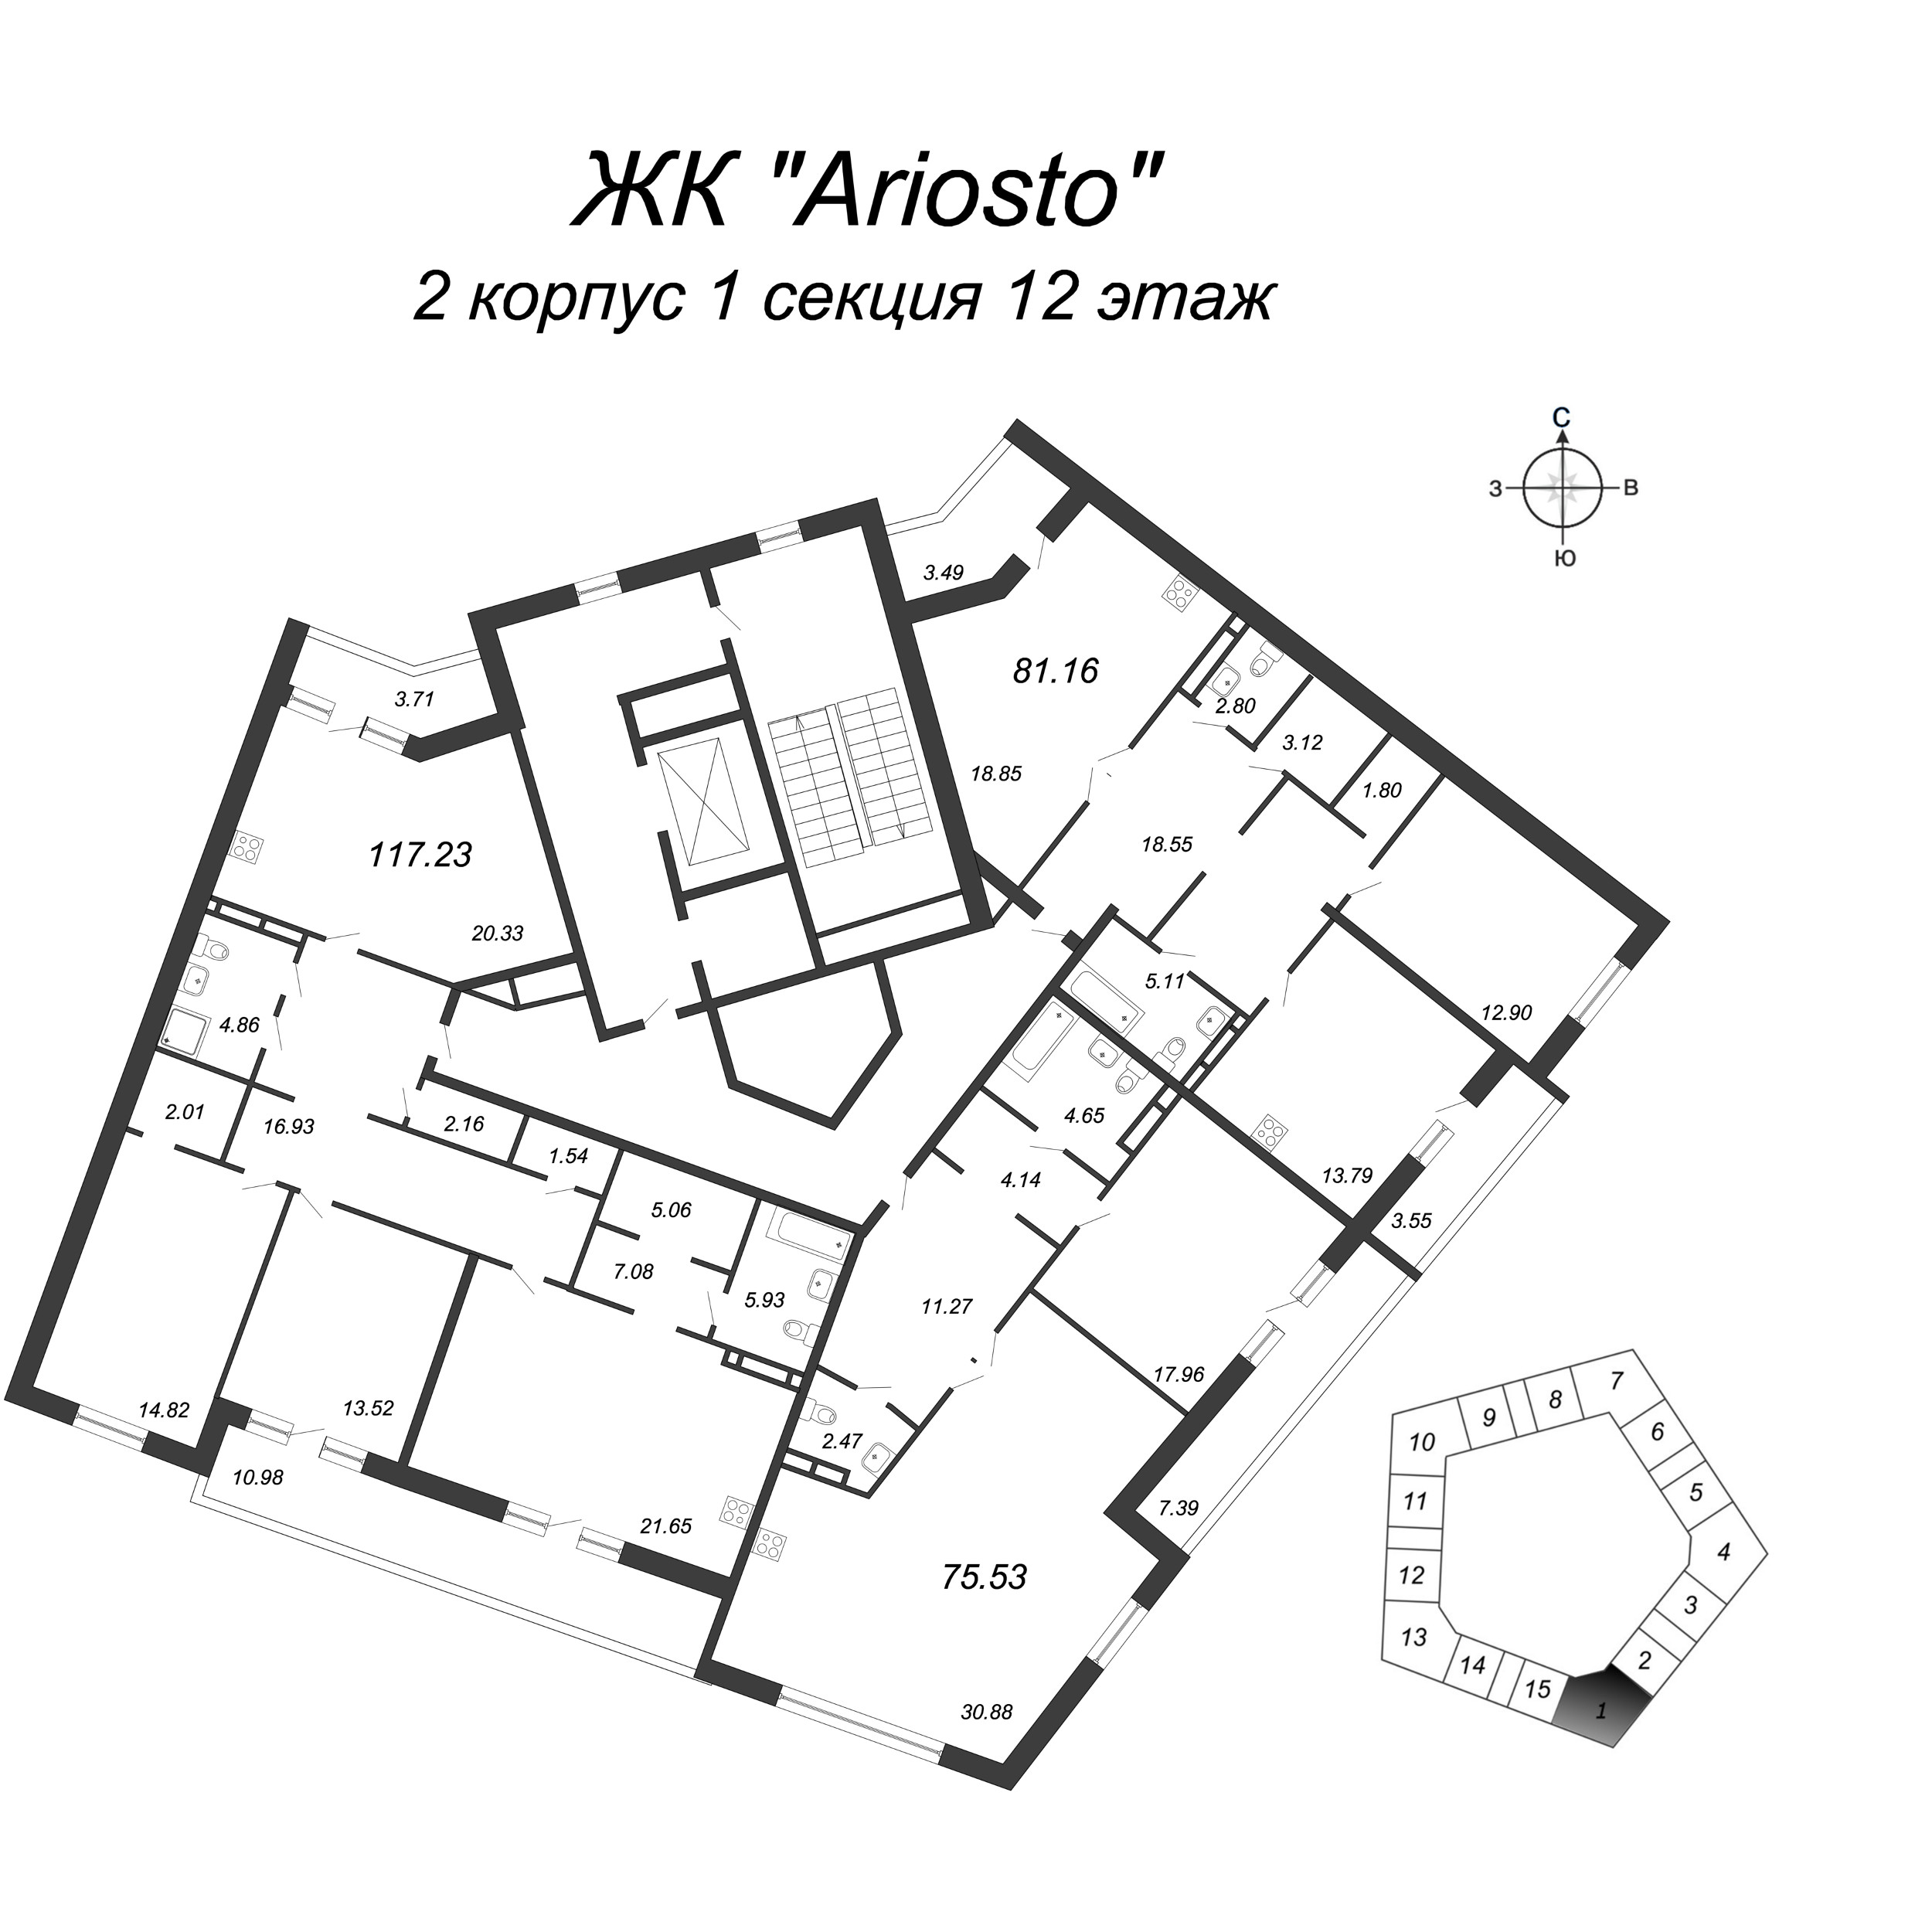 4-комнатная (Евро) квартира, 117.23 м² - планировка этажа